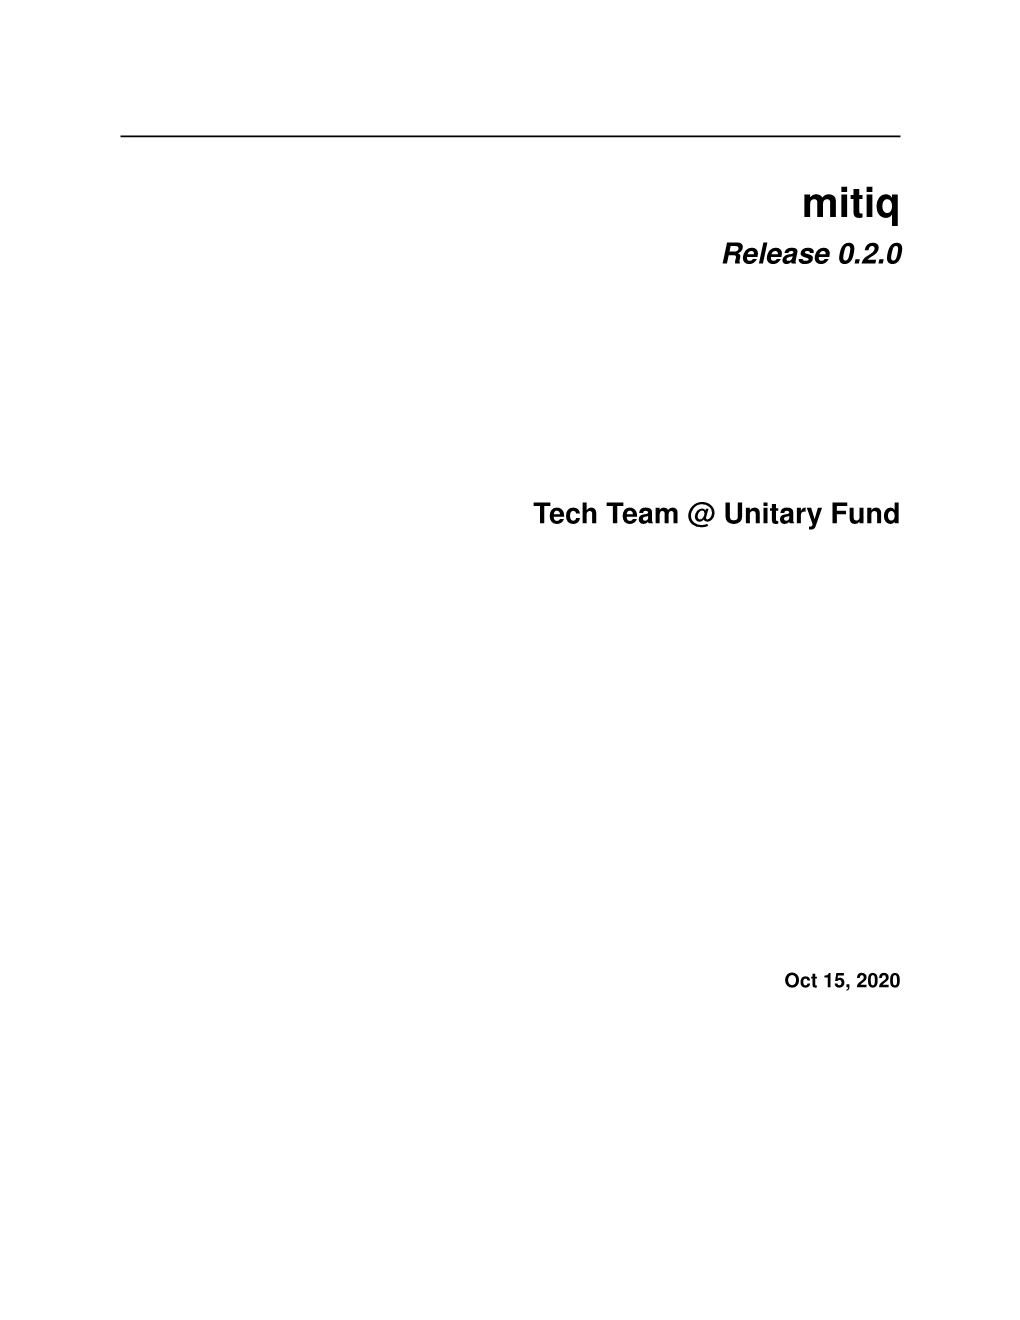 Release 0.2.0 Tech Team @ Unitary Fund